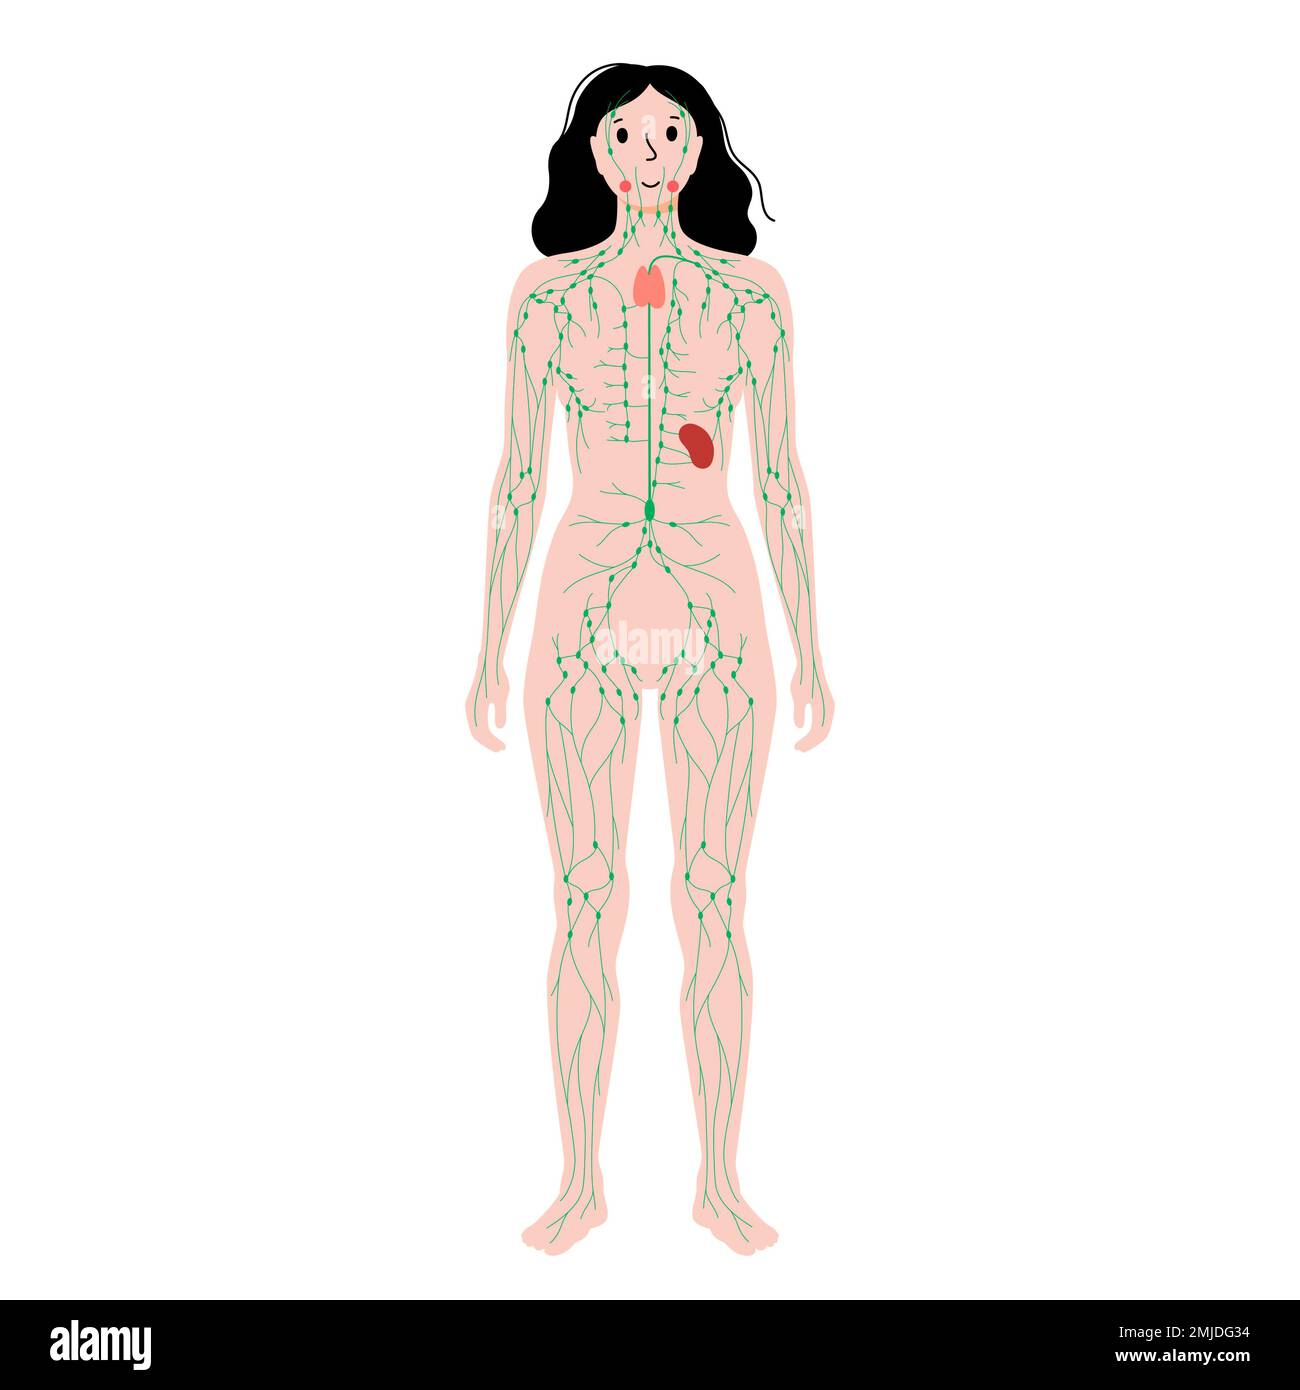 Lymphatic system, illustration Stock Photo